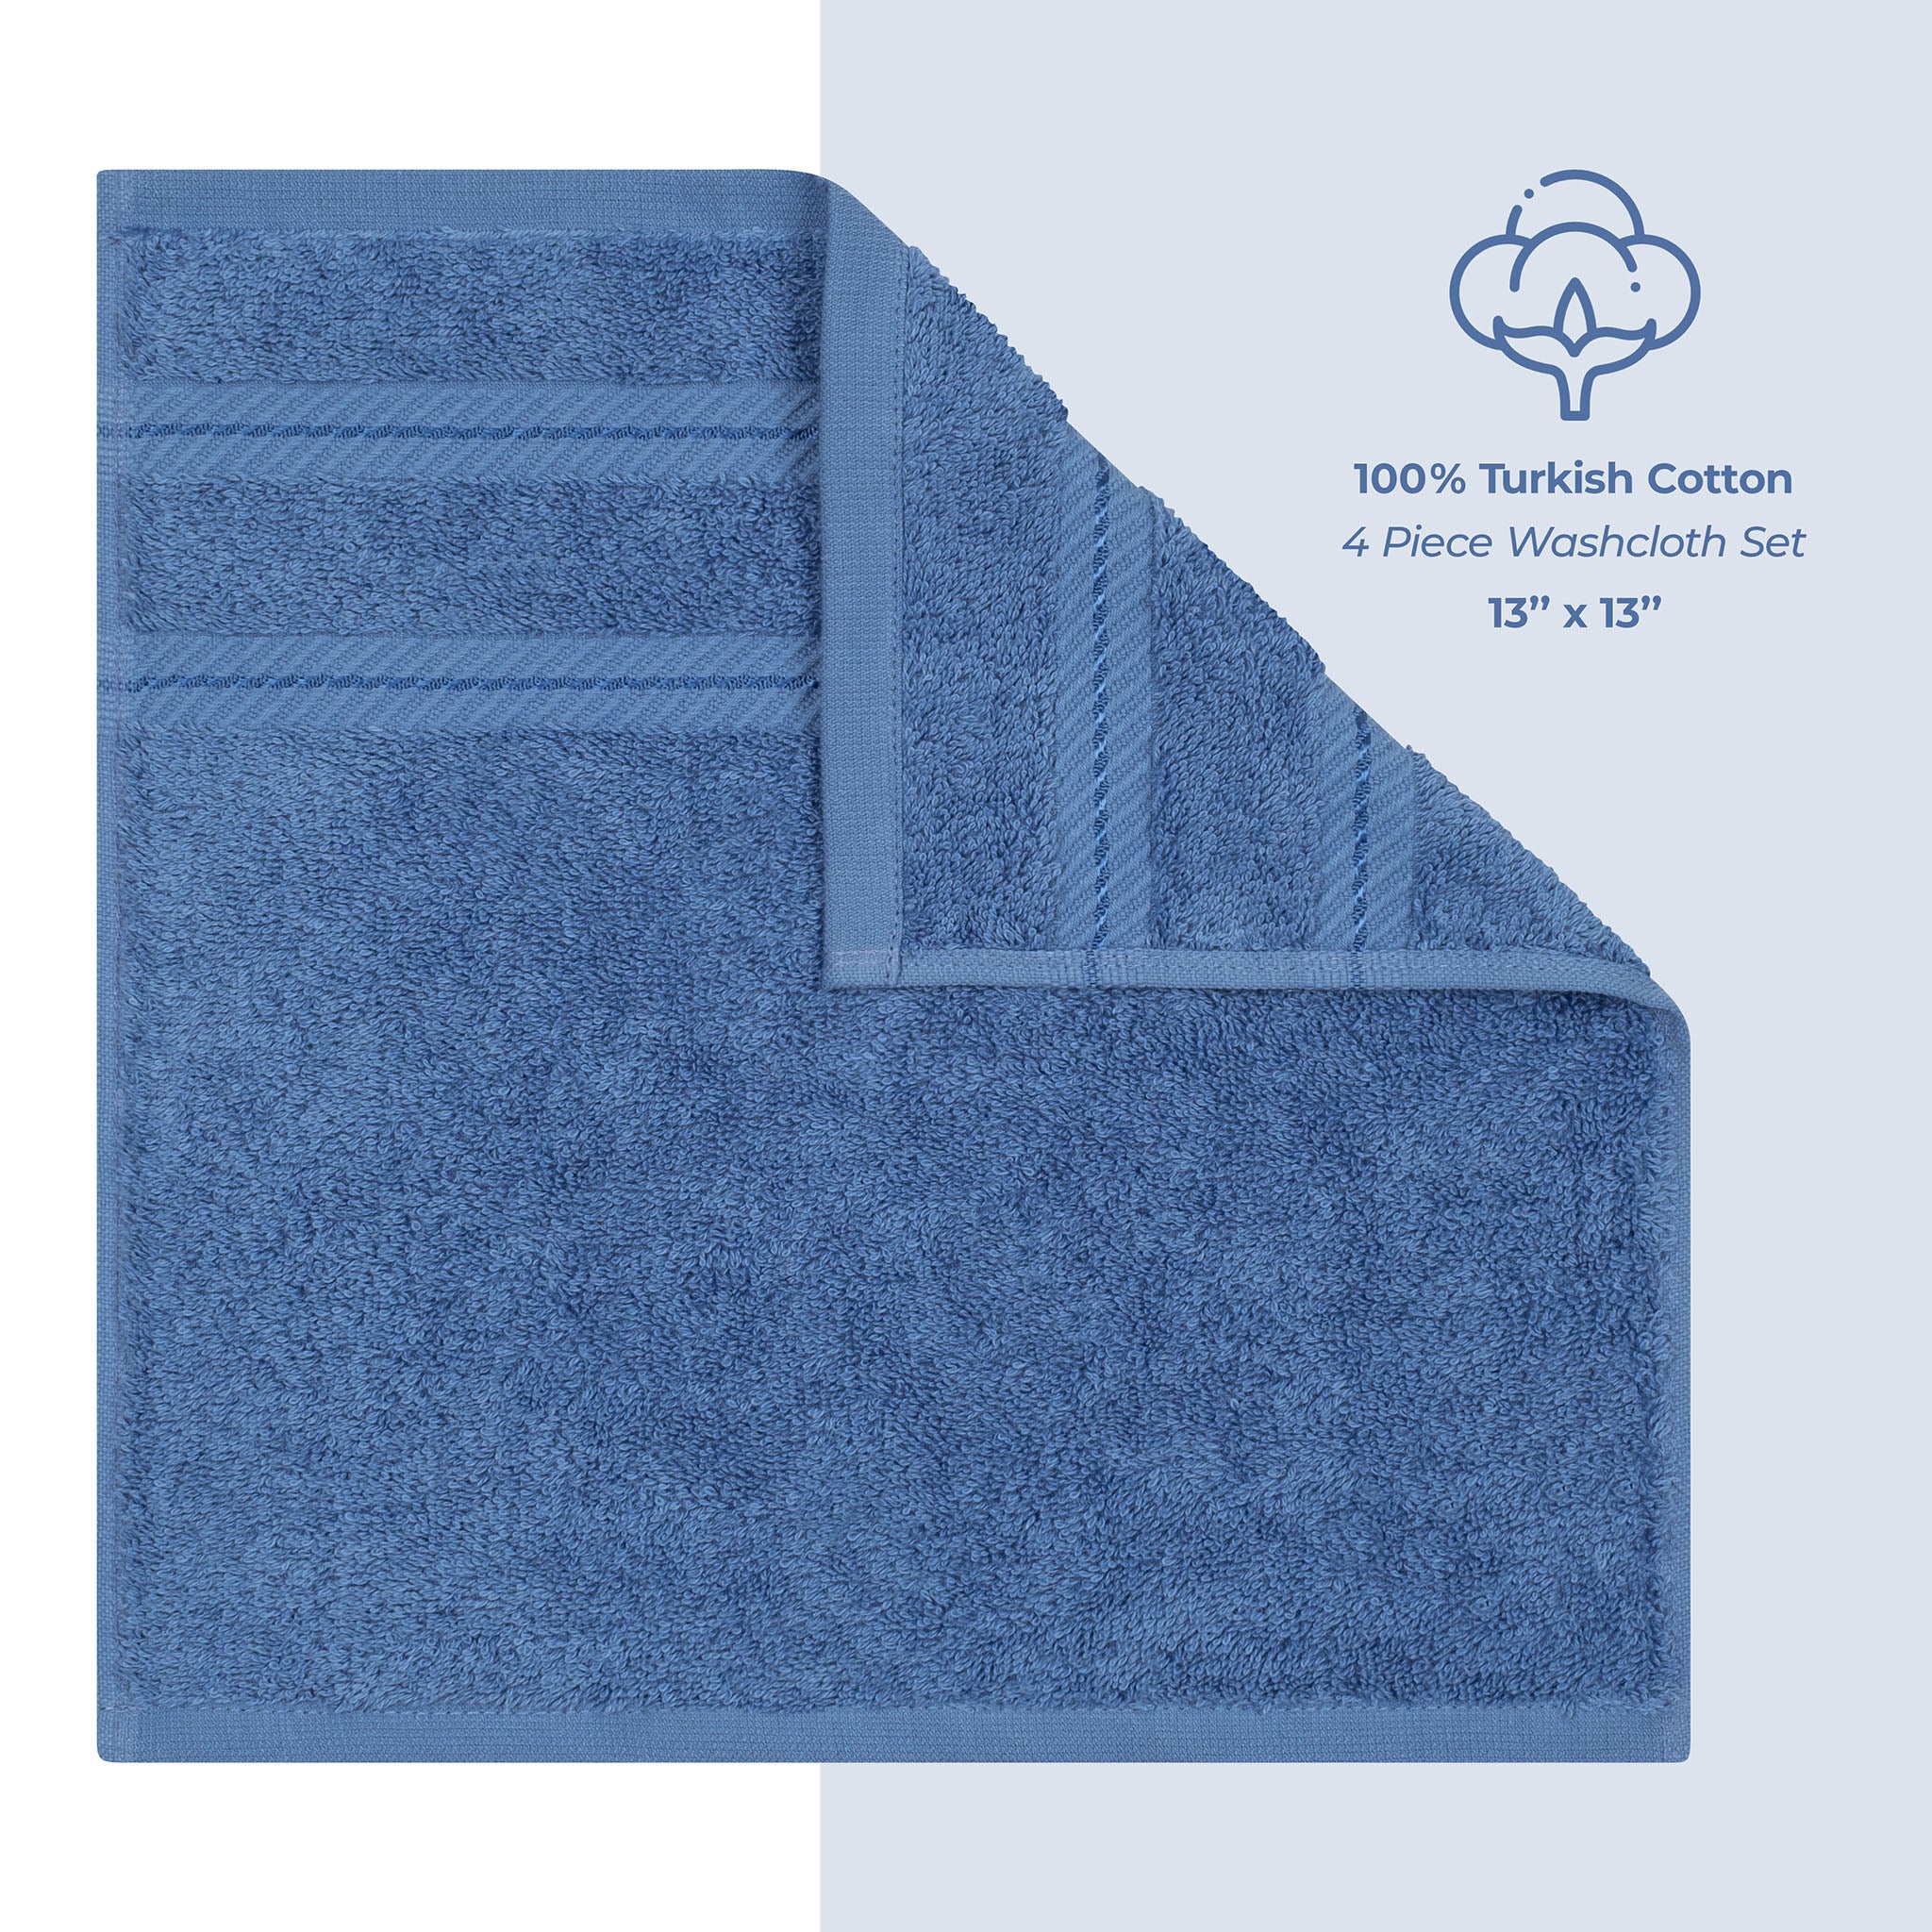  American Soft Linen 100% Turkish Cotton 4 Piece Washcloth Set - Wholesale - electric-blue-4